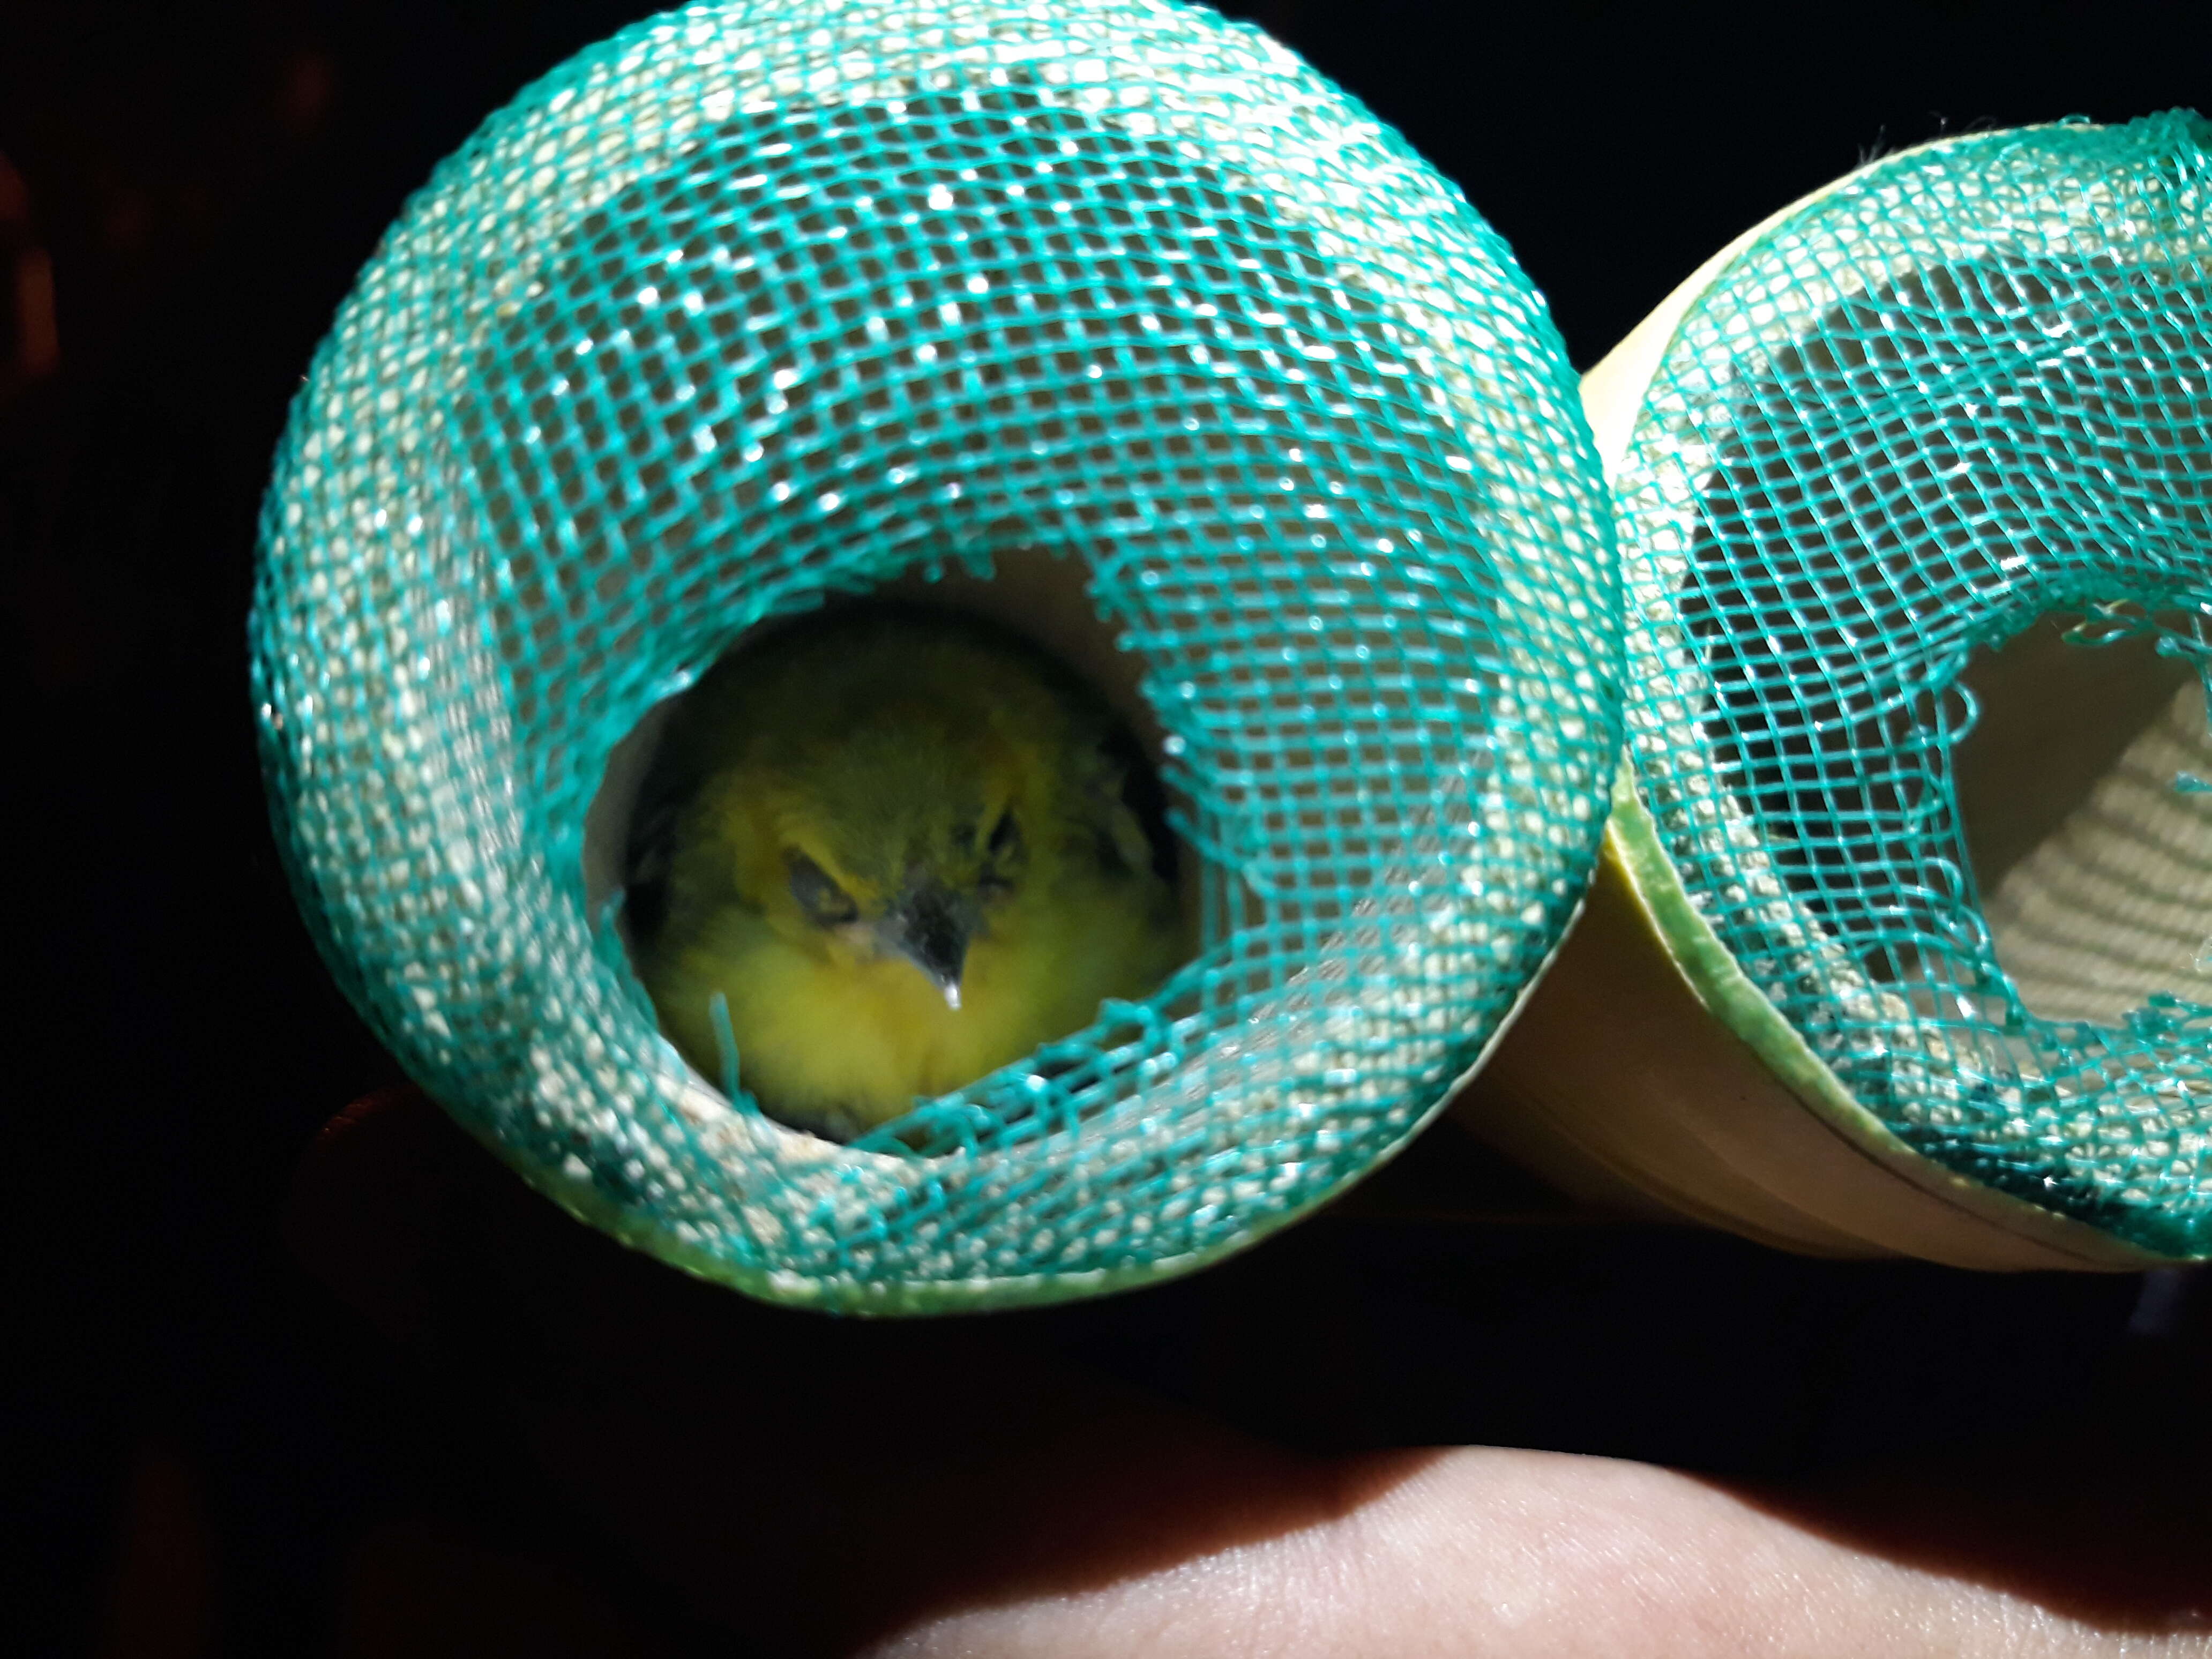 Birds inside pipes